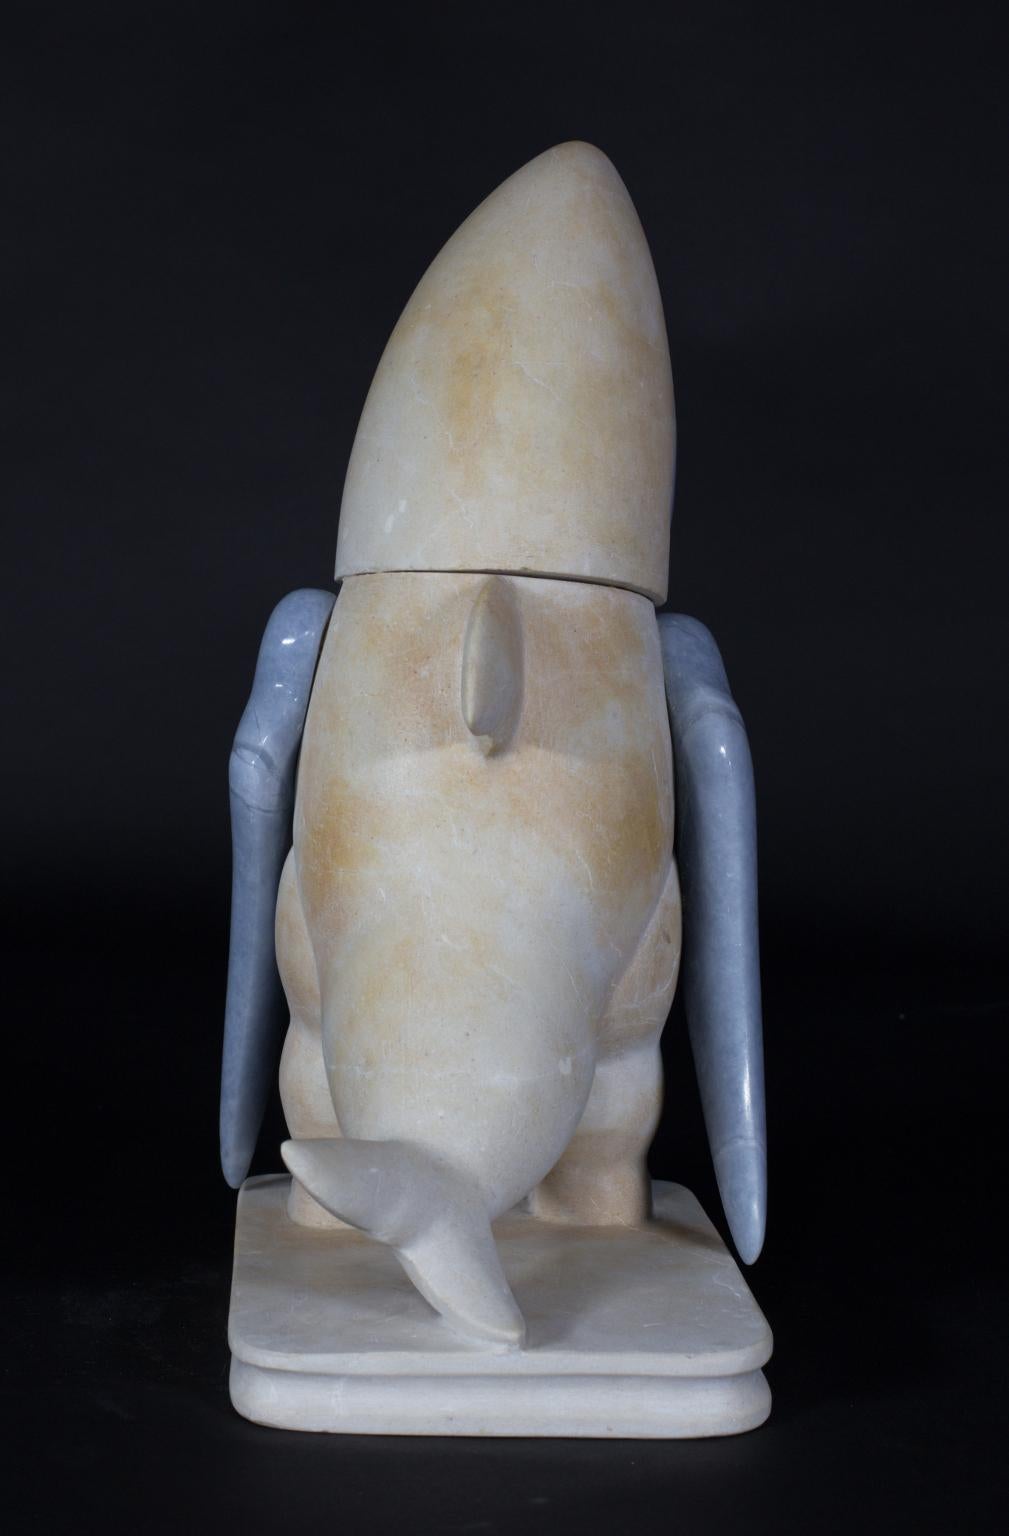 New Age Explorers: The Shark. Figurative Marble Sculpture by Mario Romero - Contemporary Art by Mario Romero Fernández